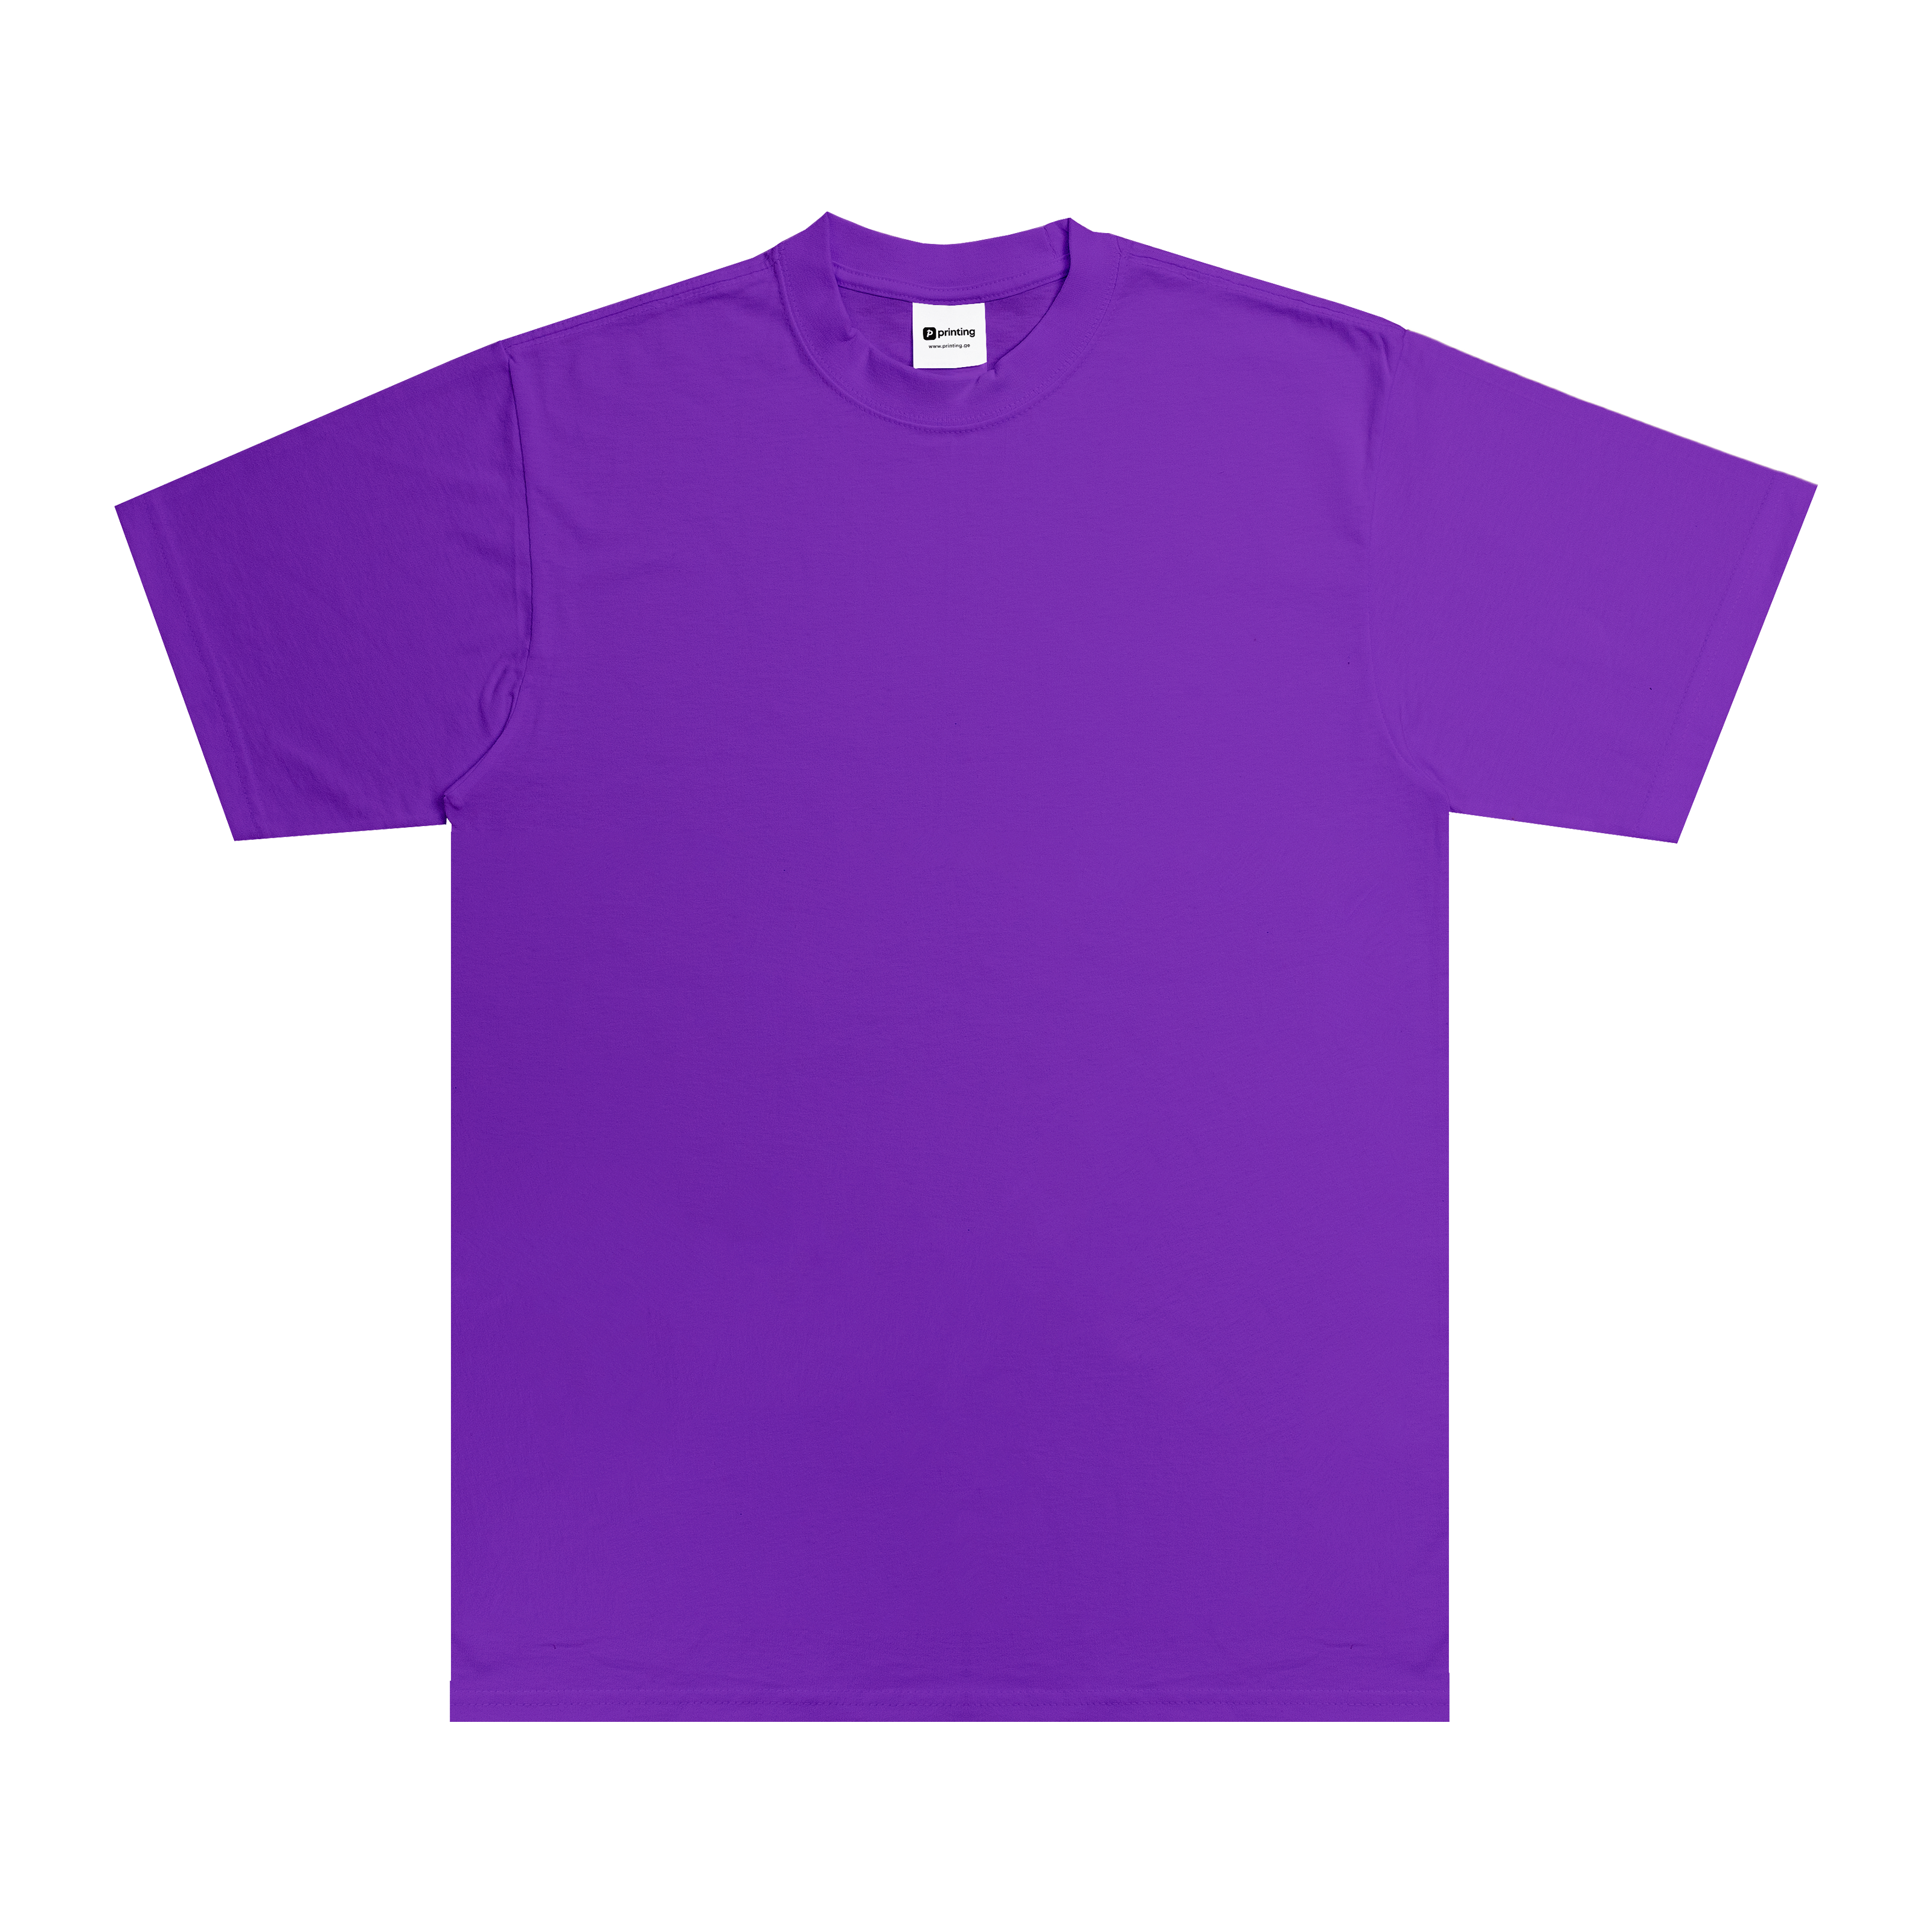 Max Heavyweight T-Shirt - Standard Size - Purple